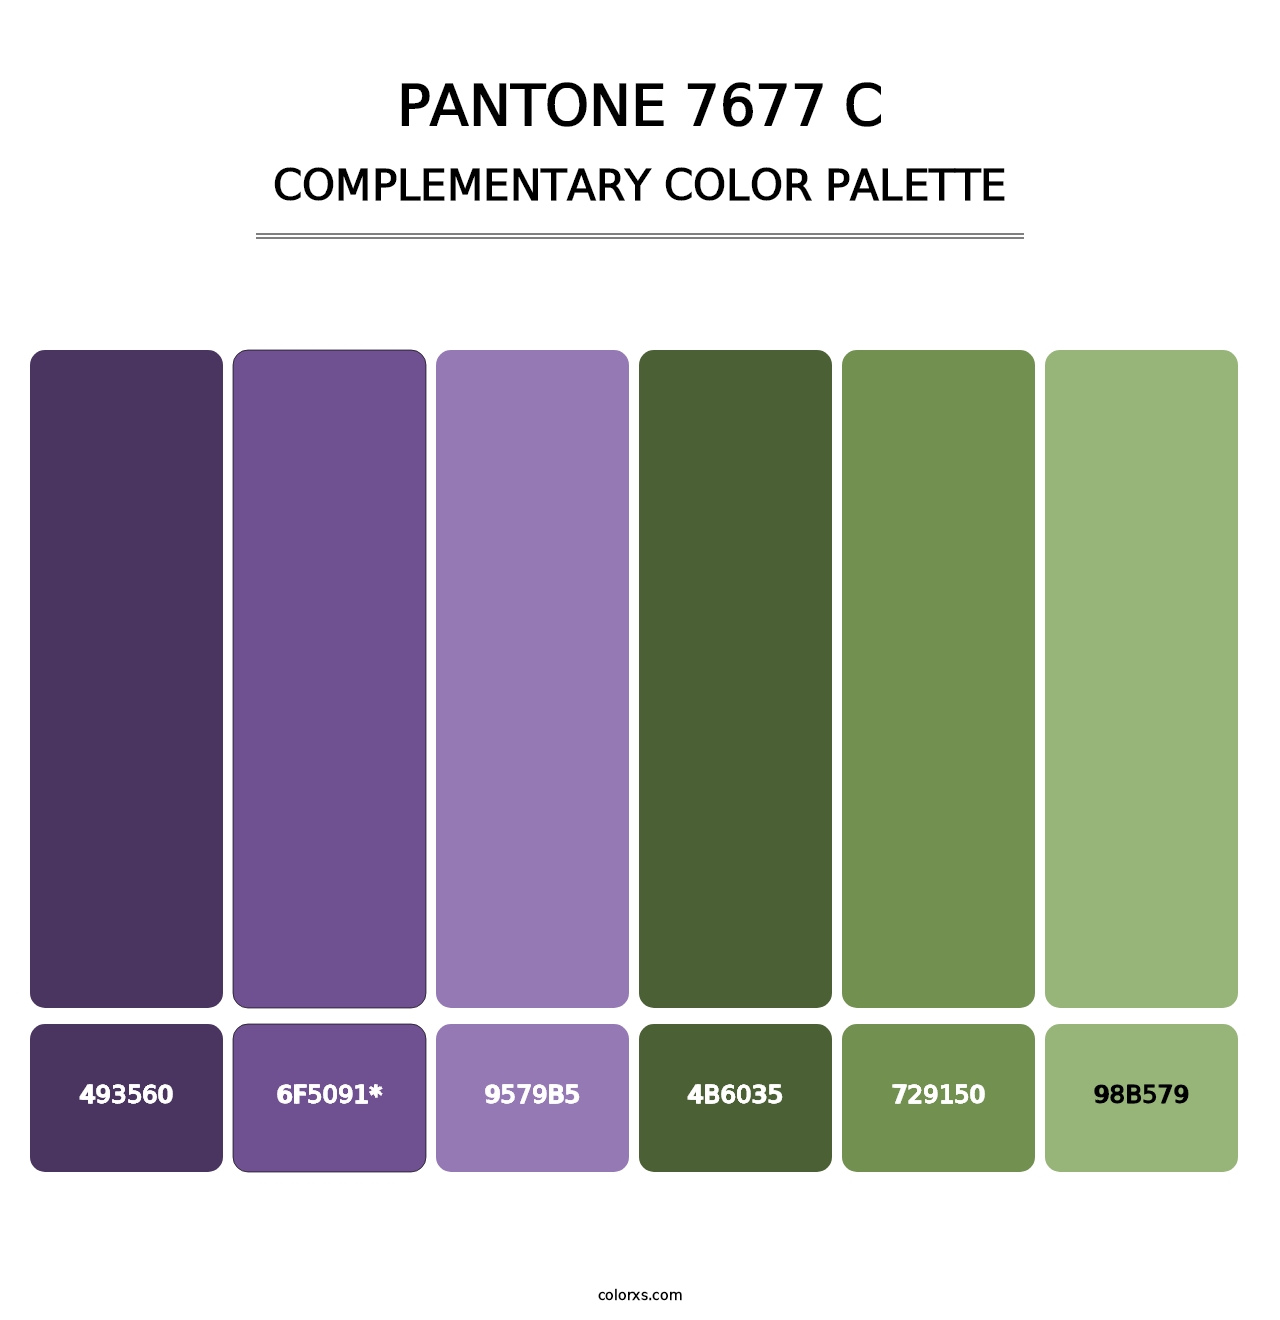 PANTONE 7677 C - Complementary Color Palette